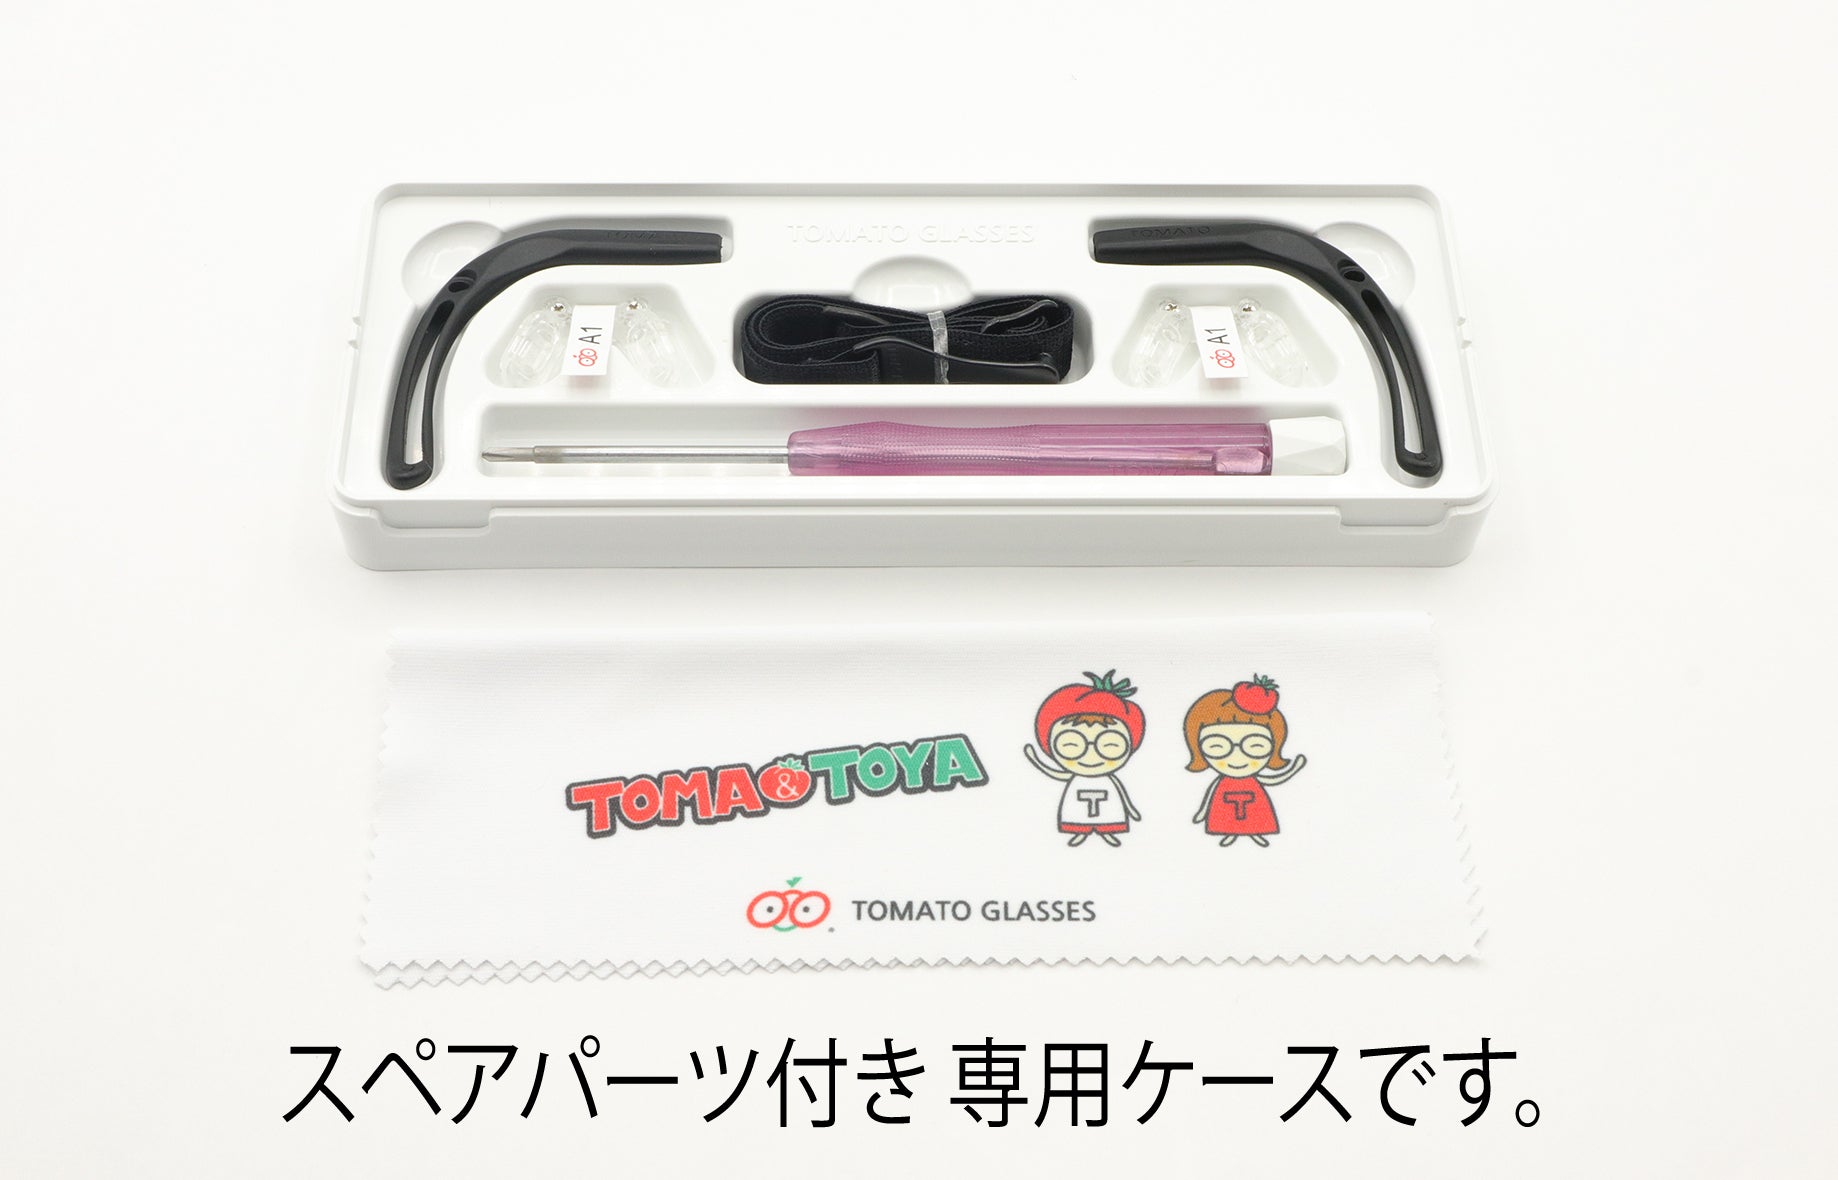 TOMATO GLASSES(トマトグラッシーズ) TKBC8ピンク(44サイズ)